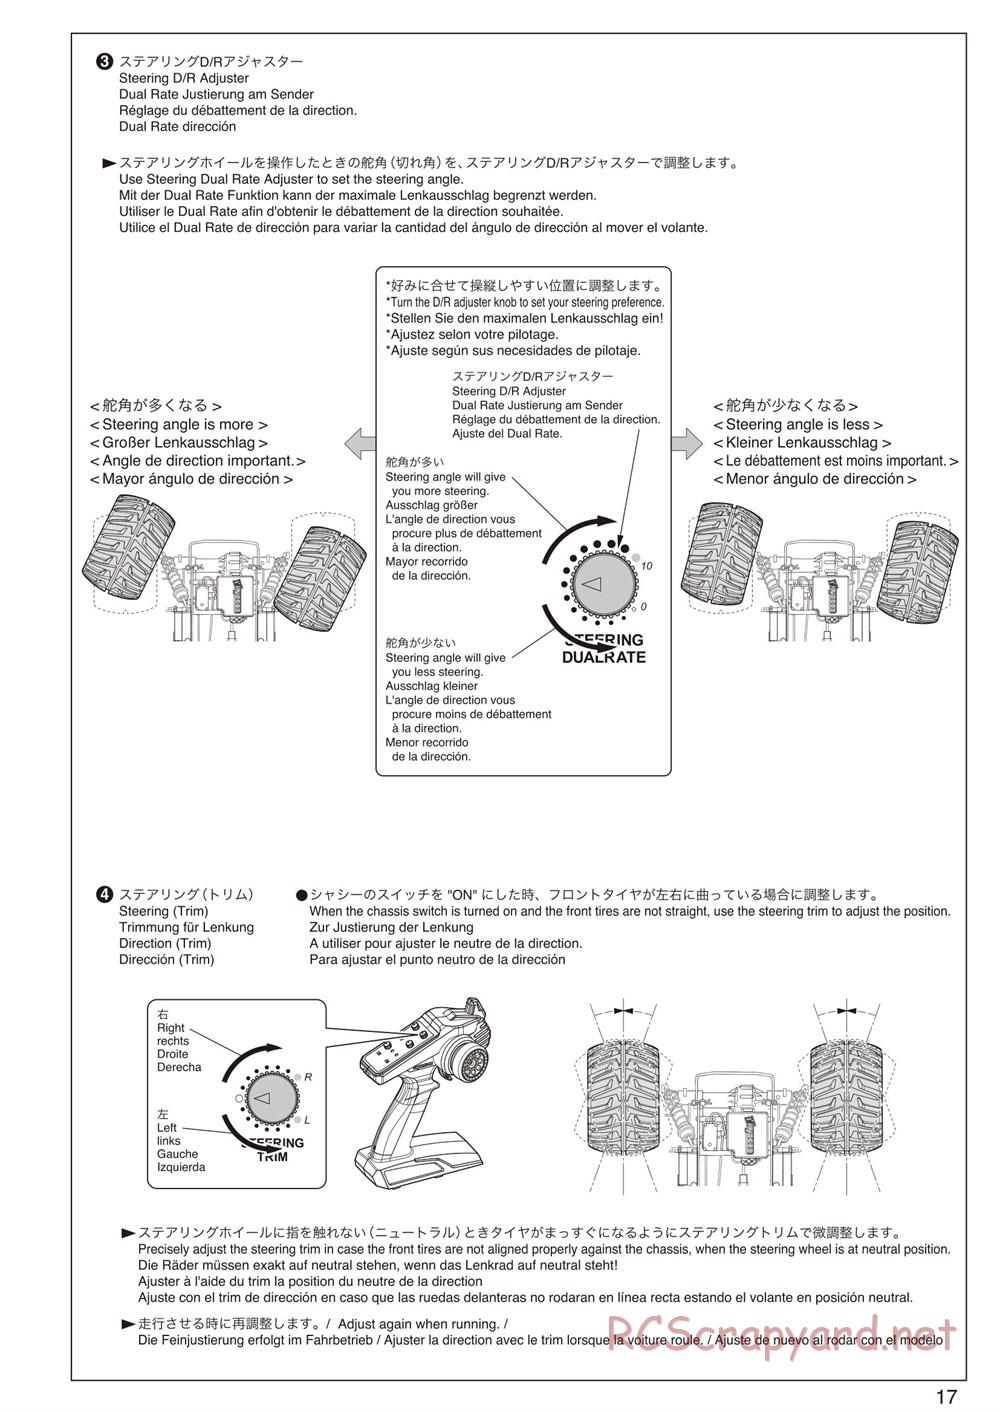 Kyosho - Mad Force Kruiser 2.0 VE - Manual - Page 17